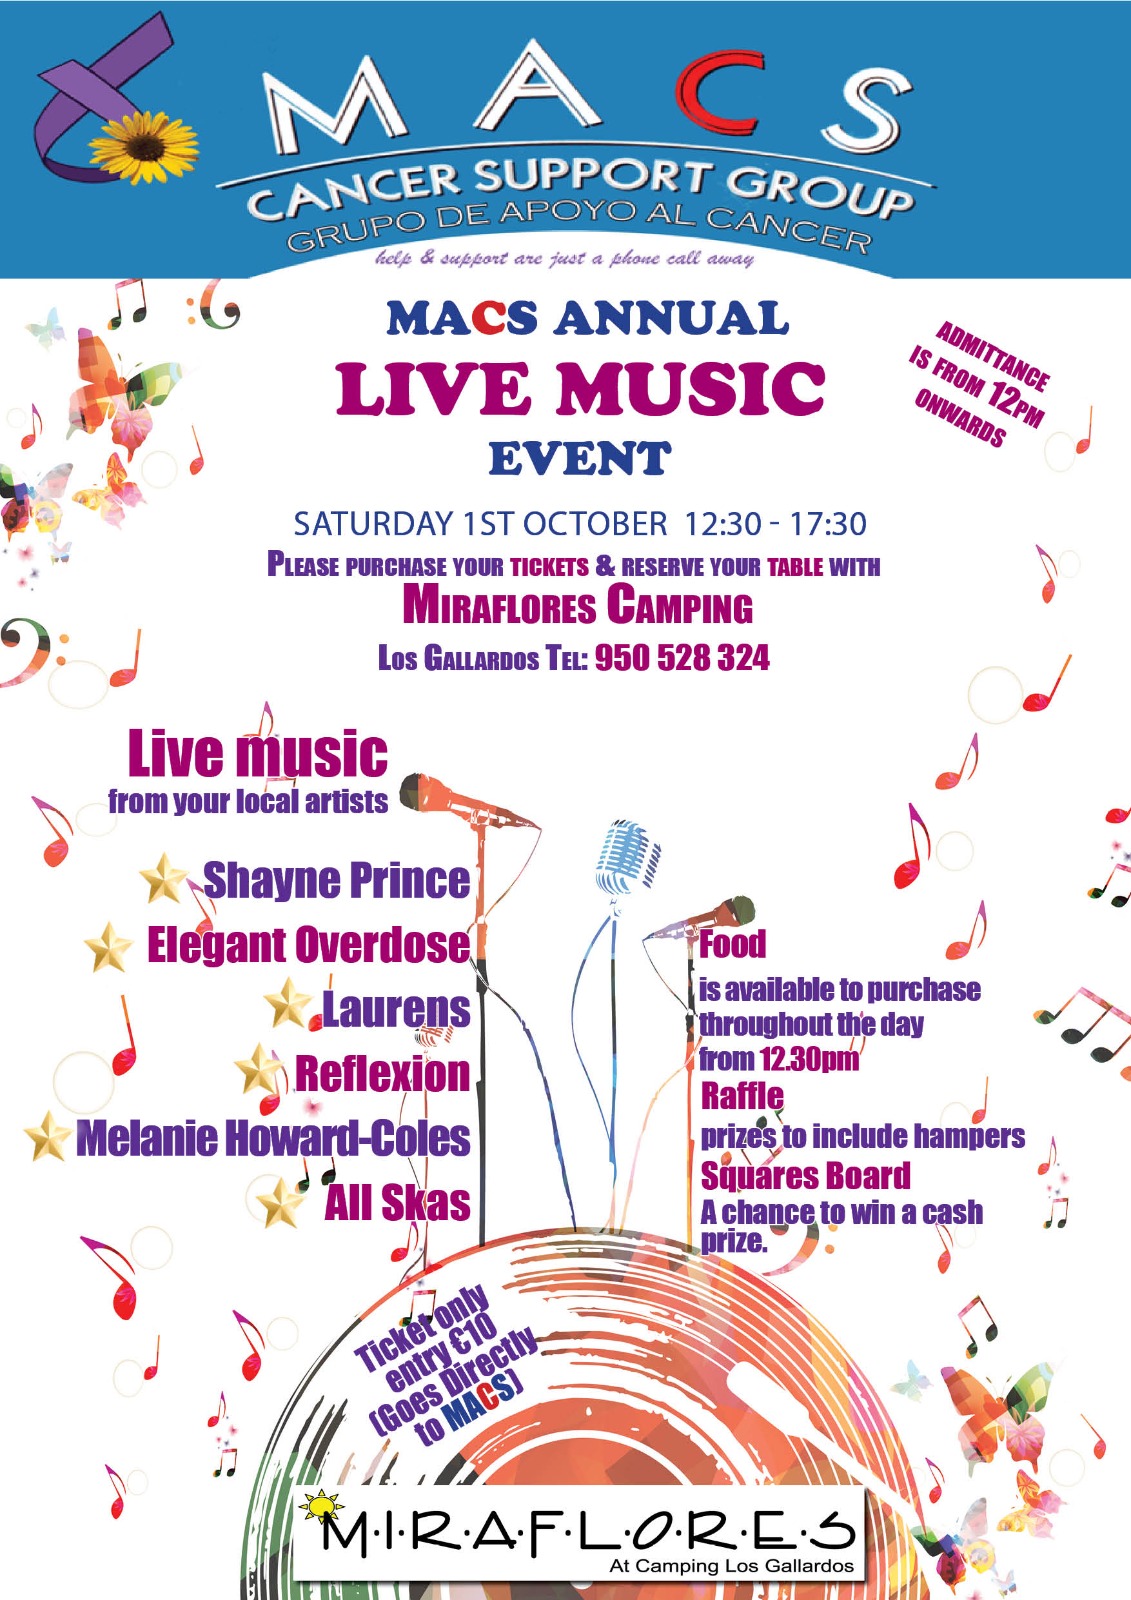 MACS annual live music event